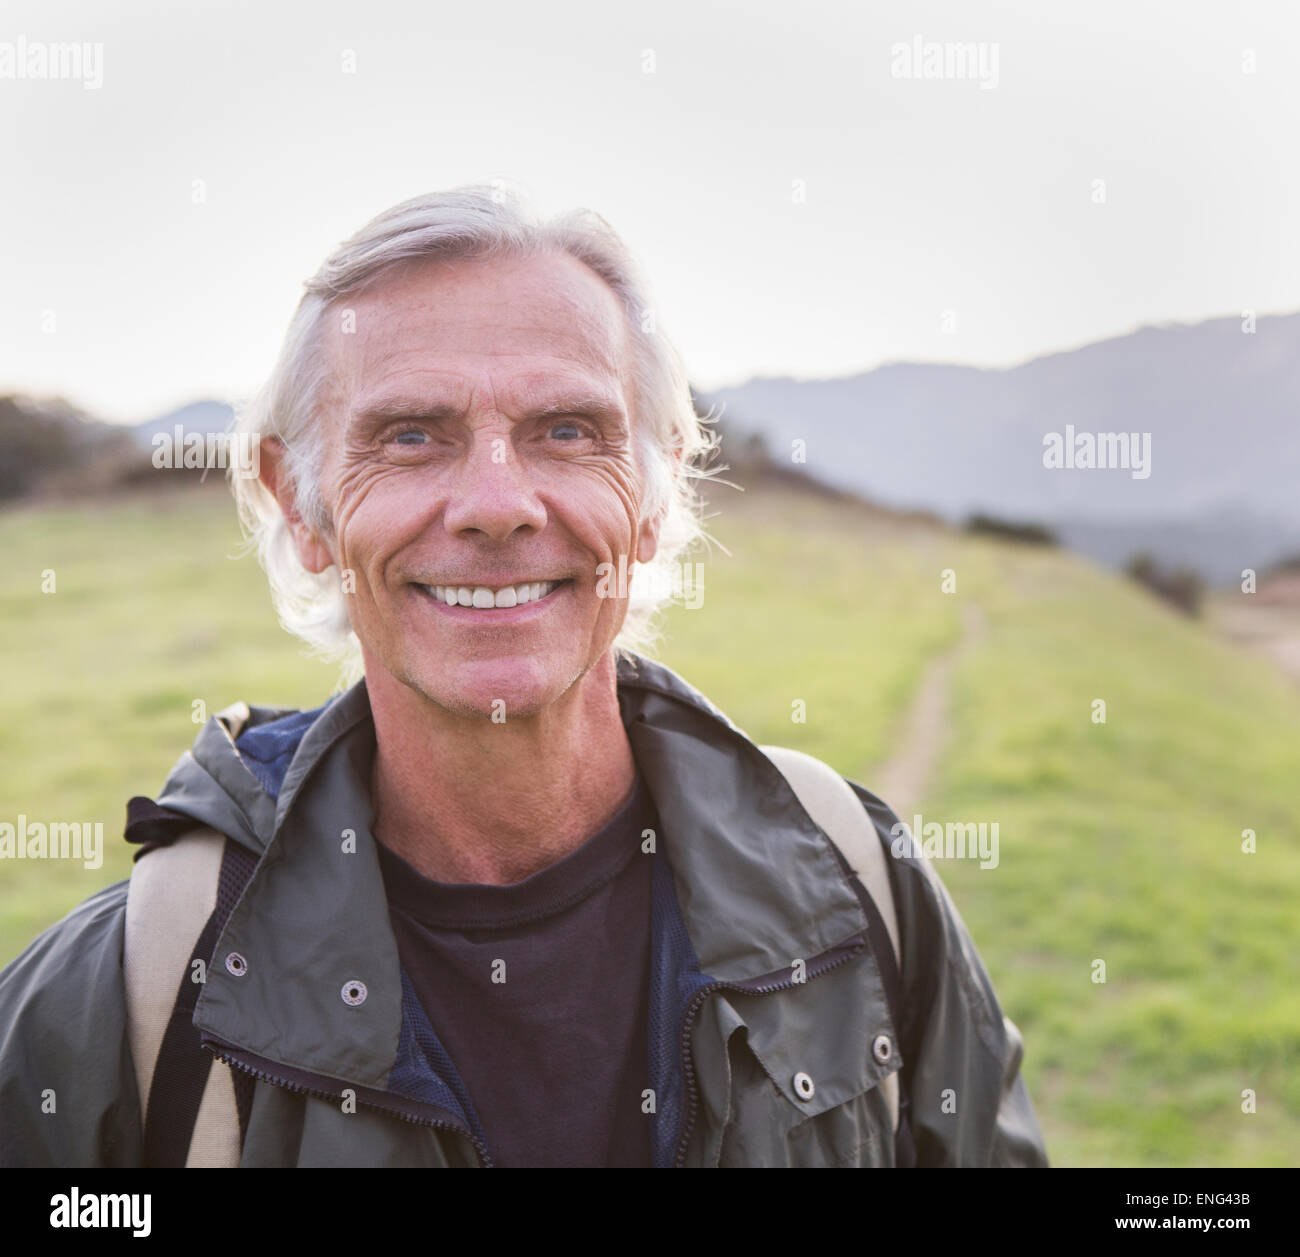 Older Caucasian man walking on dirt trail Stock Photo